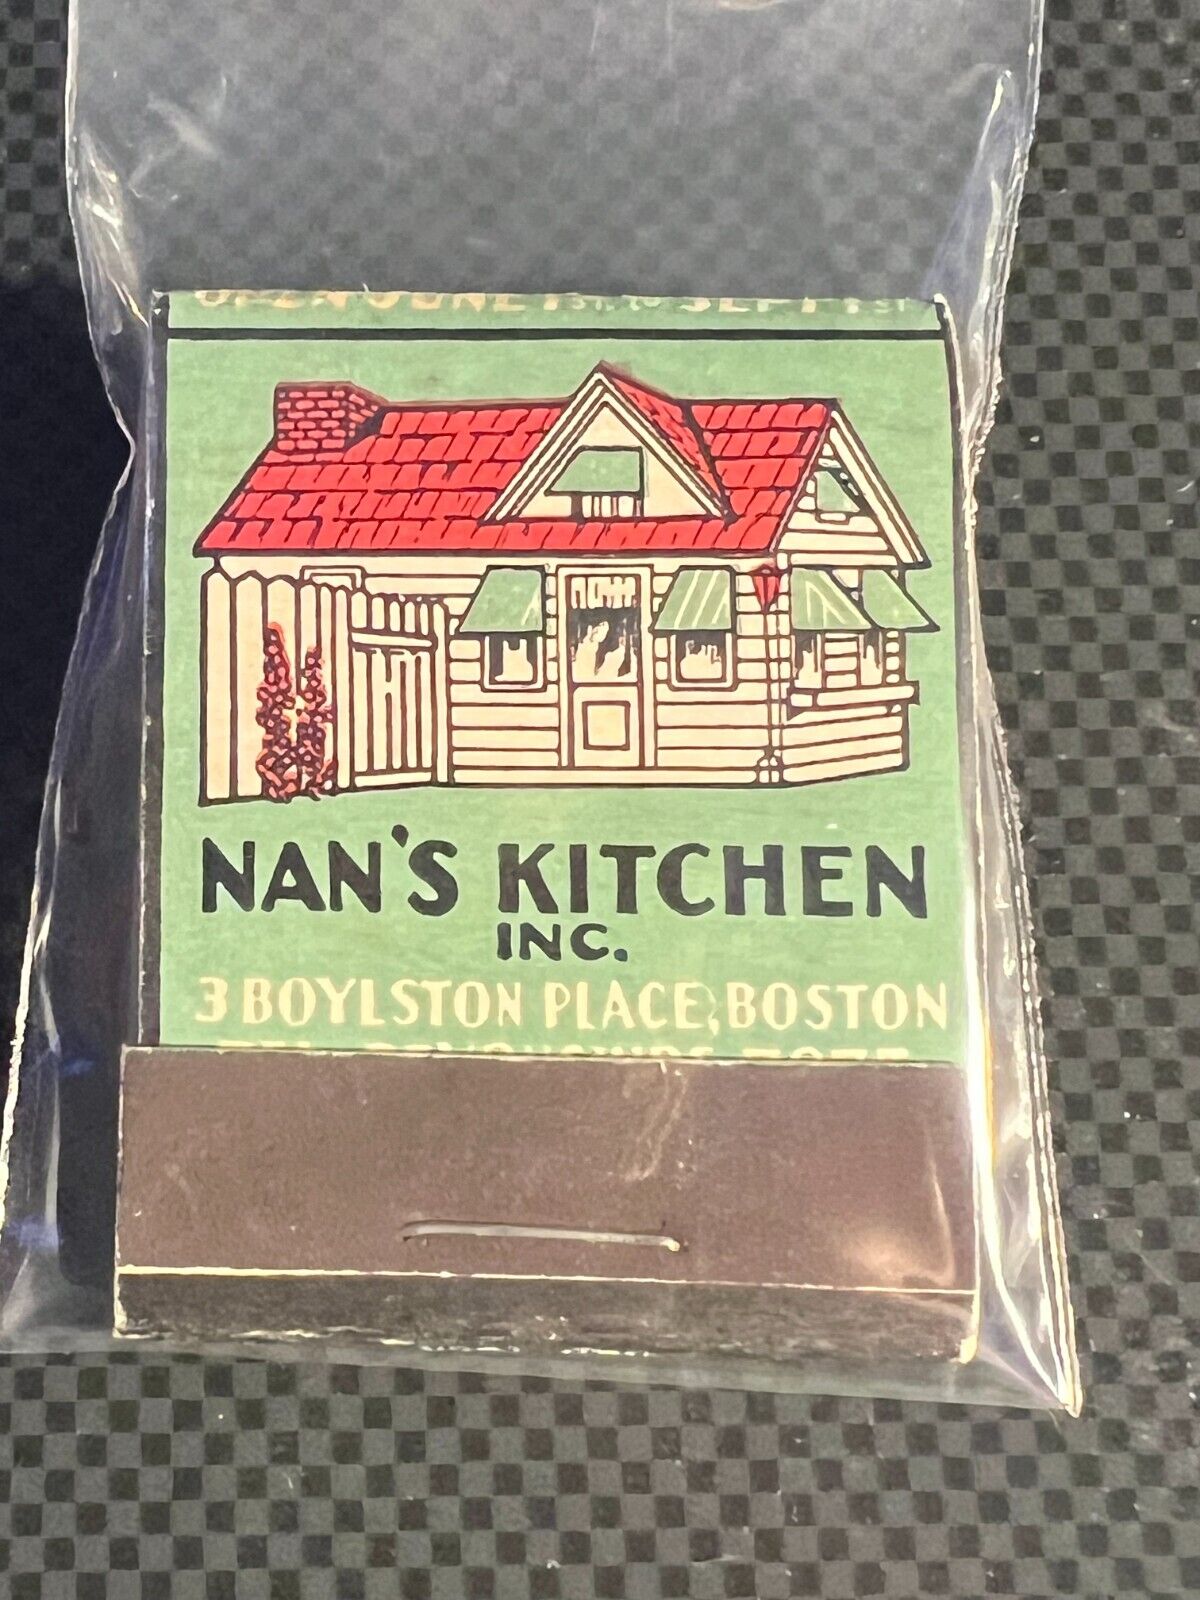 VINTAGE MATCHBOOK - NAN'S KITCHEN INC. - 3 BOYLSTON PLACE, BOSTON - UNSTRUCK